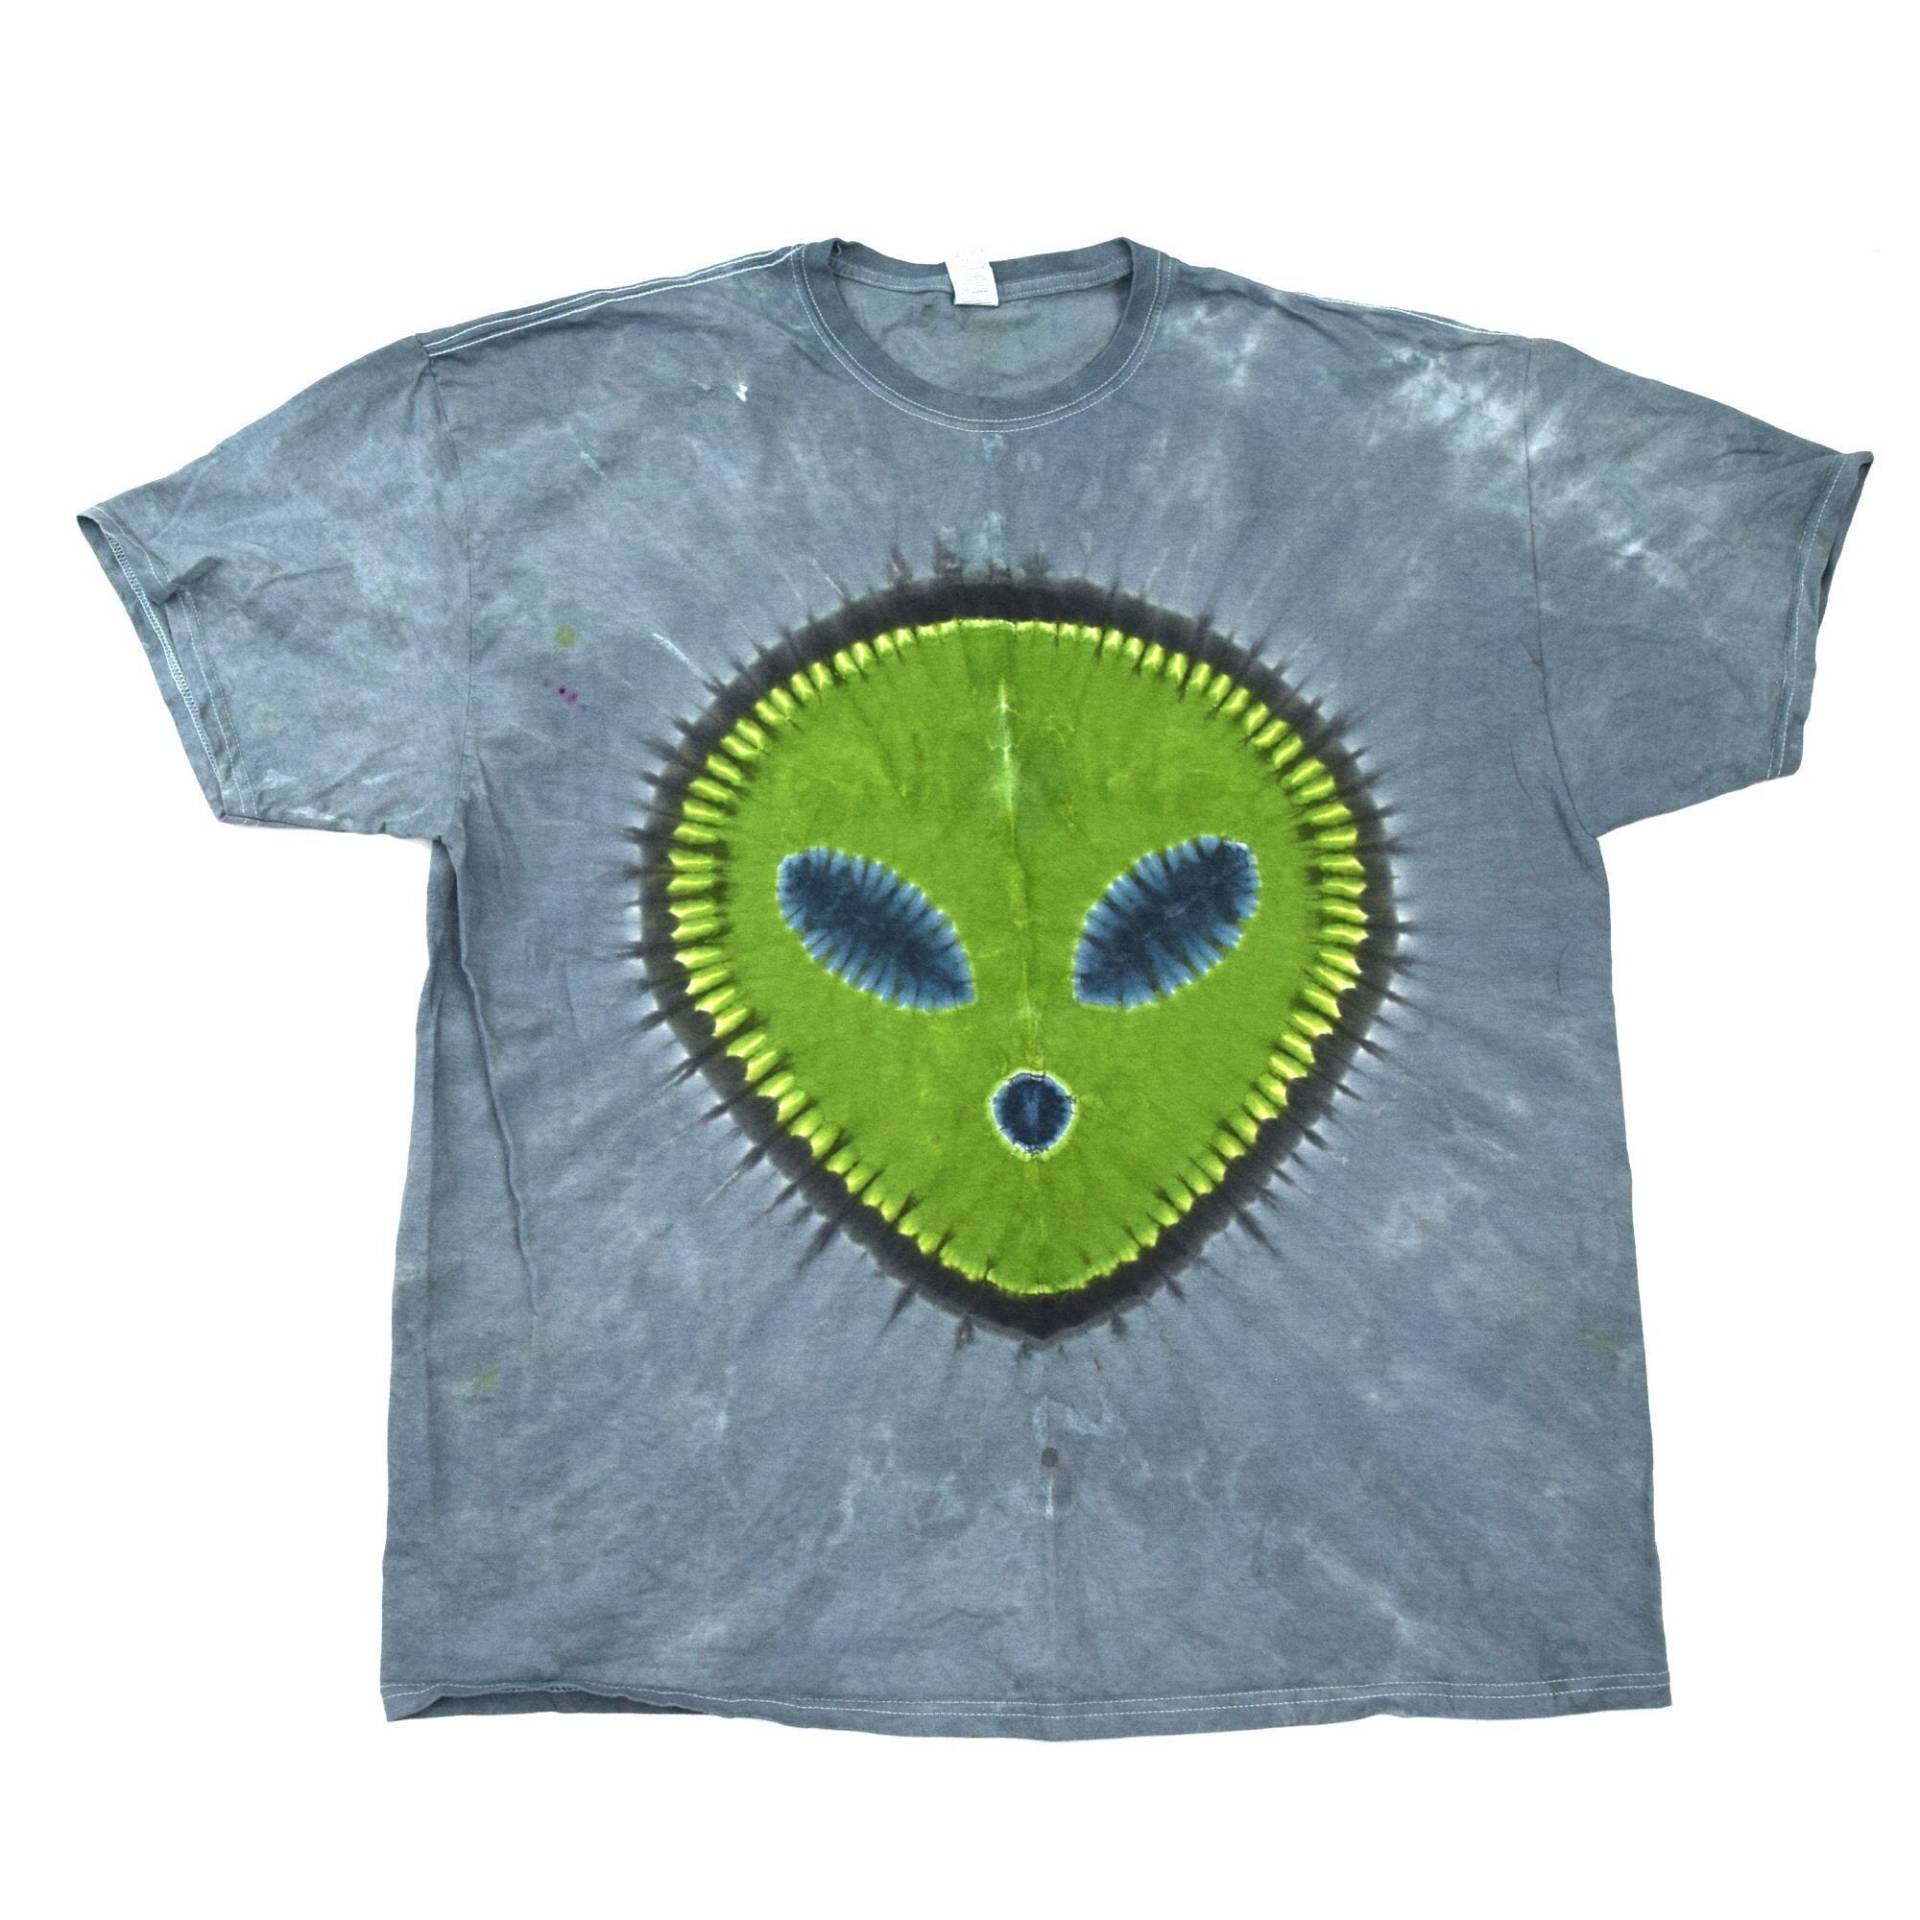 I Want To Believe ~ Grüner Alien Kopf Auf Grauem Tie Dye T-Shirt | Fruit Of The Loom Hd Cotton Size 2xl | One A Kind von madebyhippies